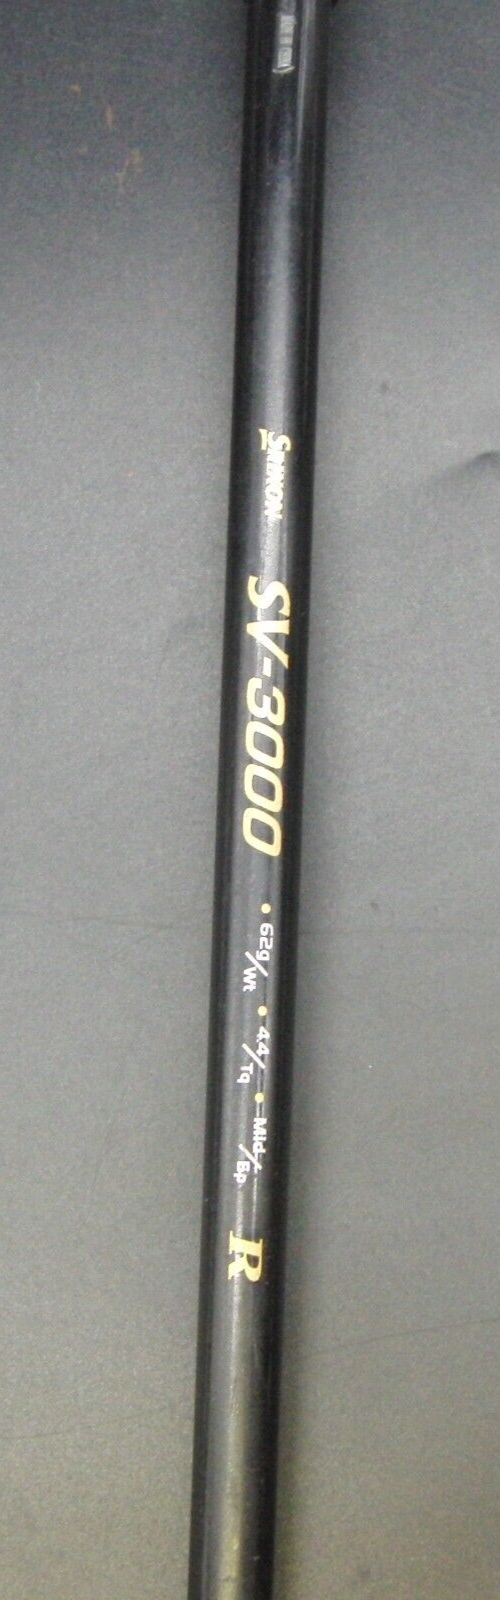 Srixon I-403 AD 6 Iron Regular Graphite Shaft Golf Pride Grip